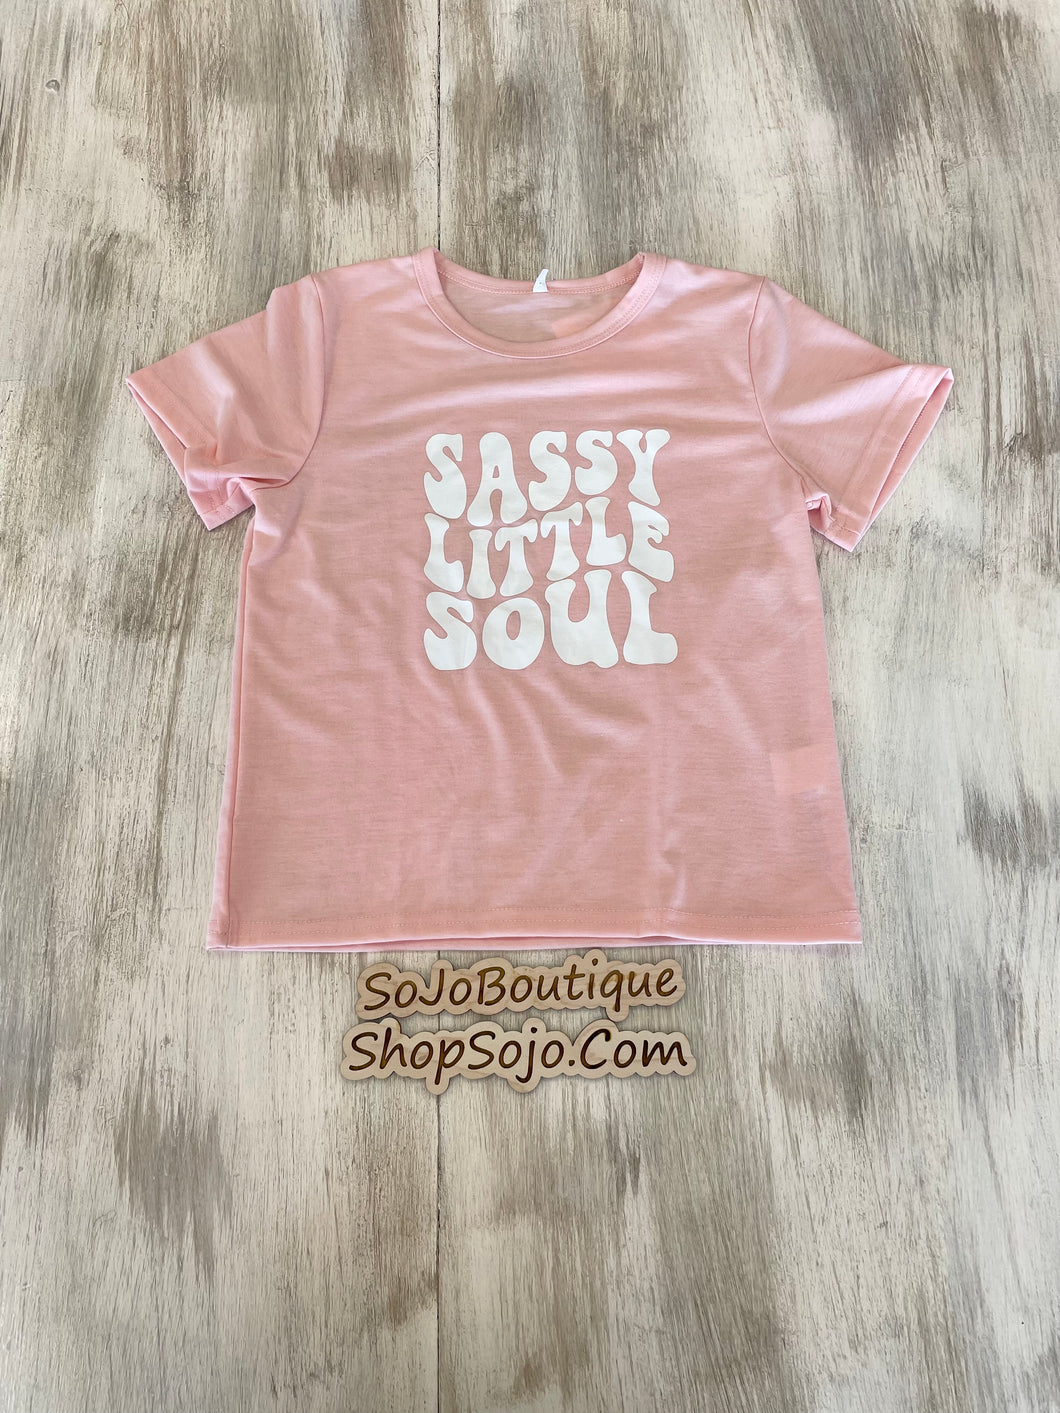 Sassy Little Soul Pink Tee